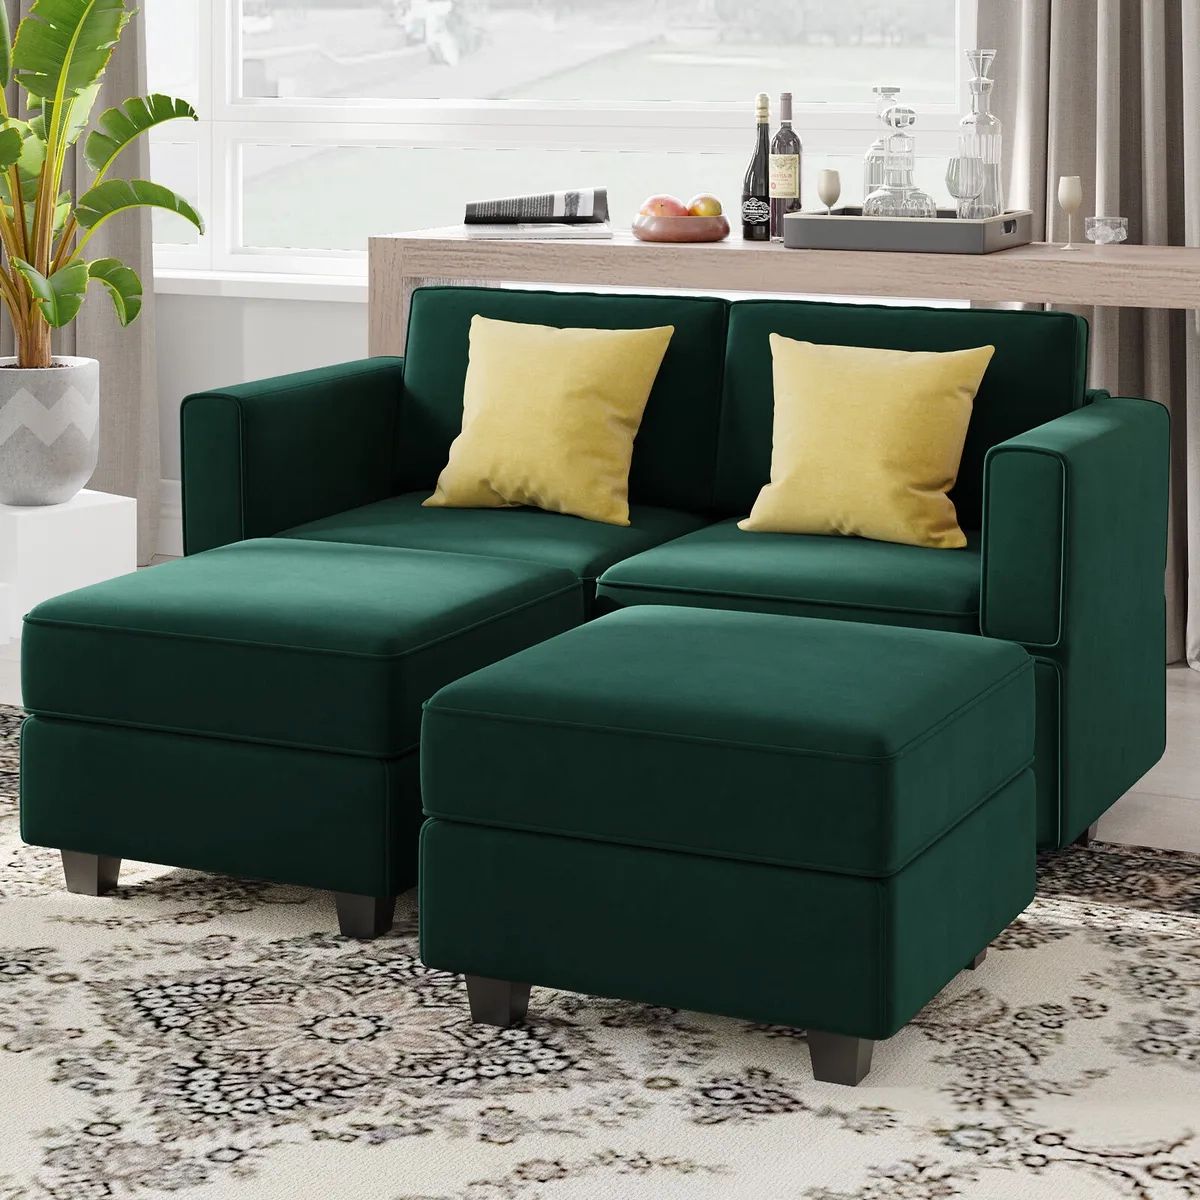 Belffin Modular Sectional Sofa With Storage Oversized Couch Bed Velvet Green  | Ebay In Green Velvet Modular Sectionals (View 10 of 15)